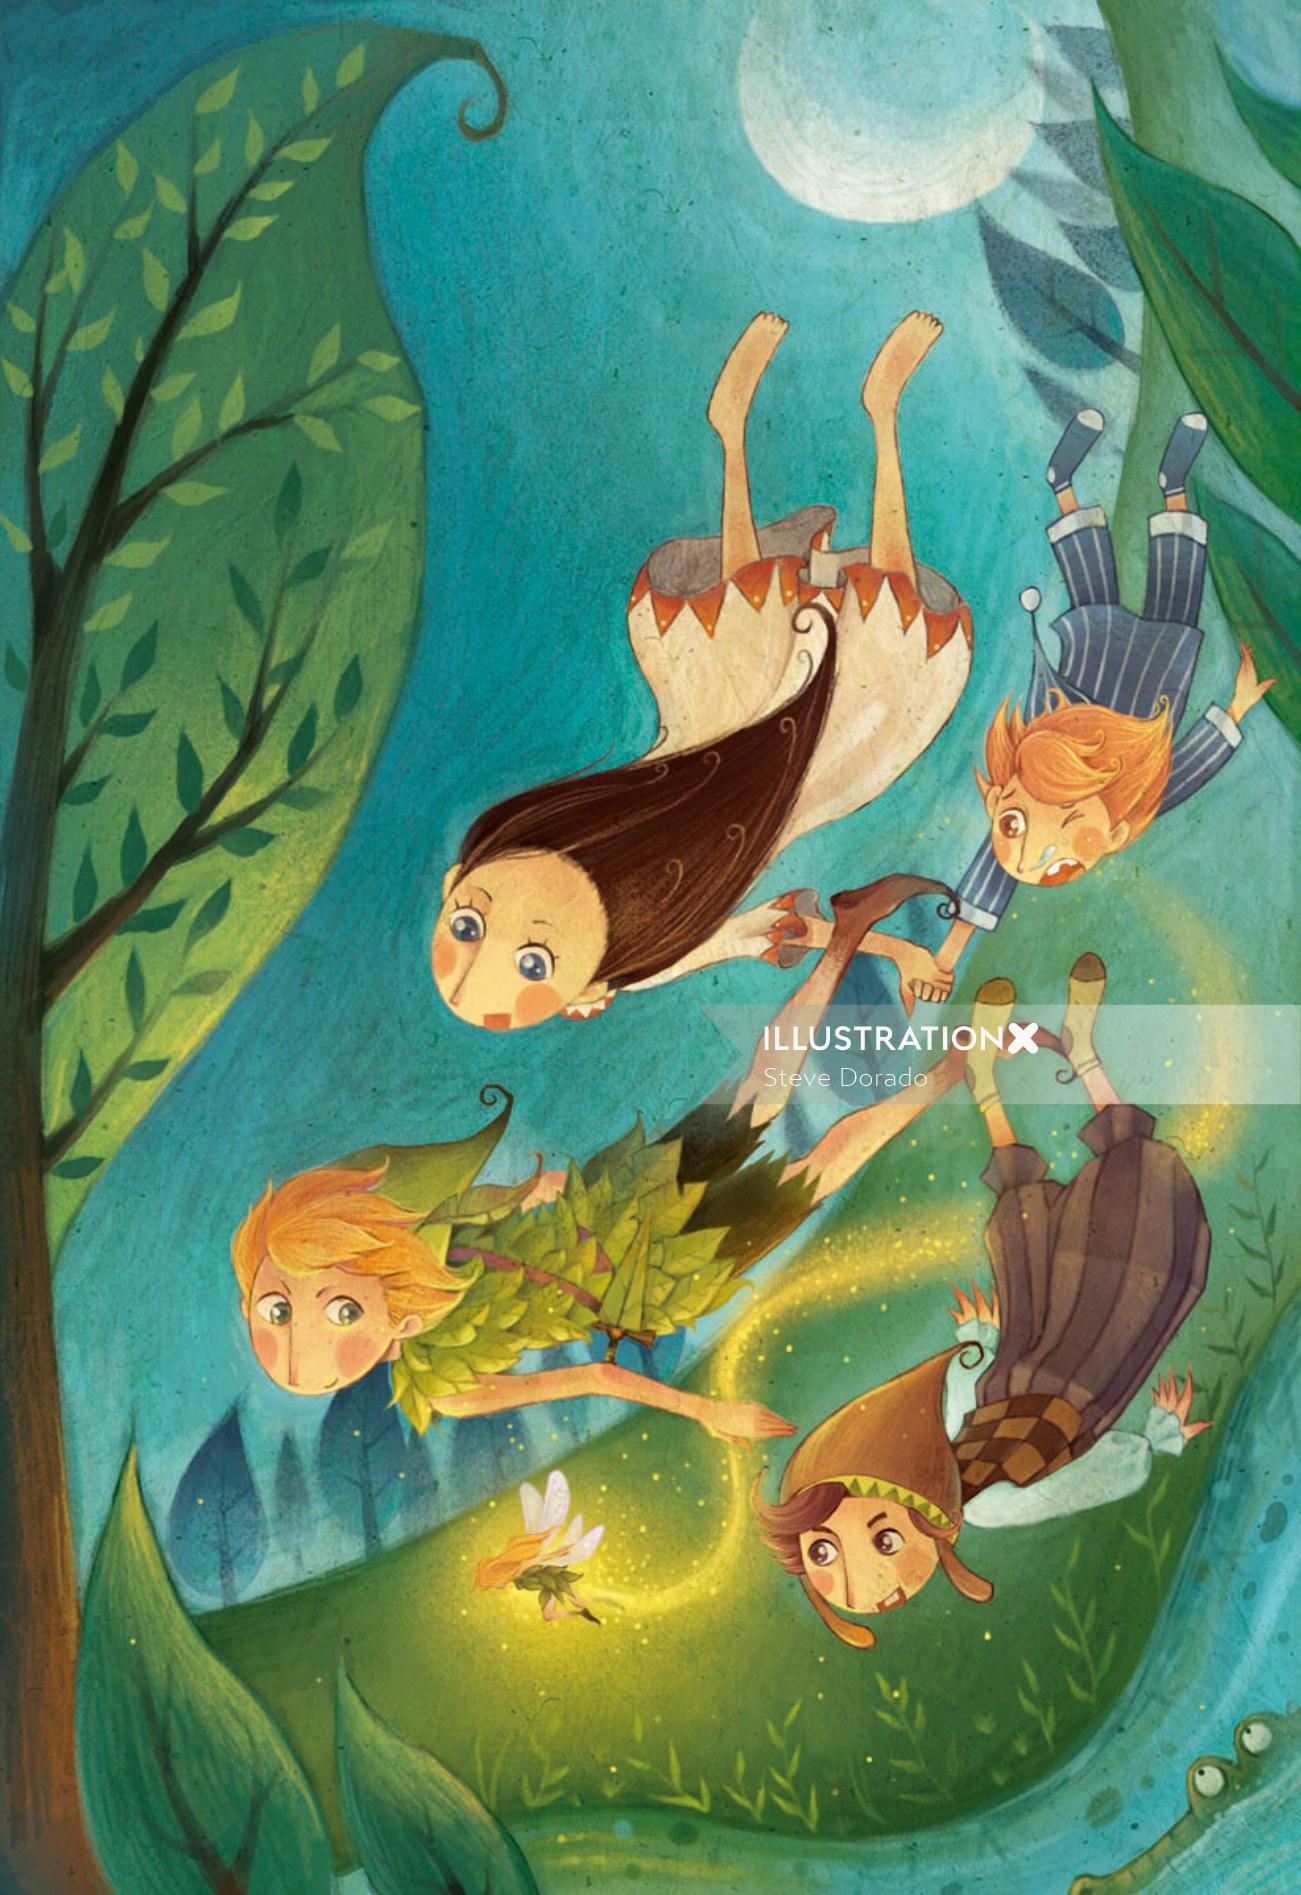 peter pan children book illustration
